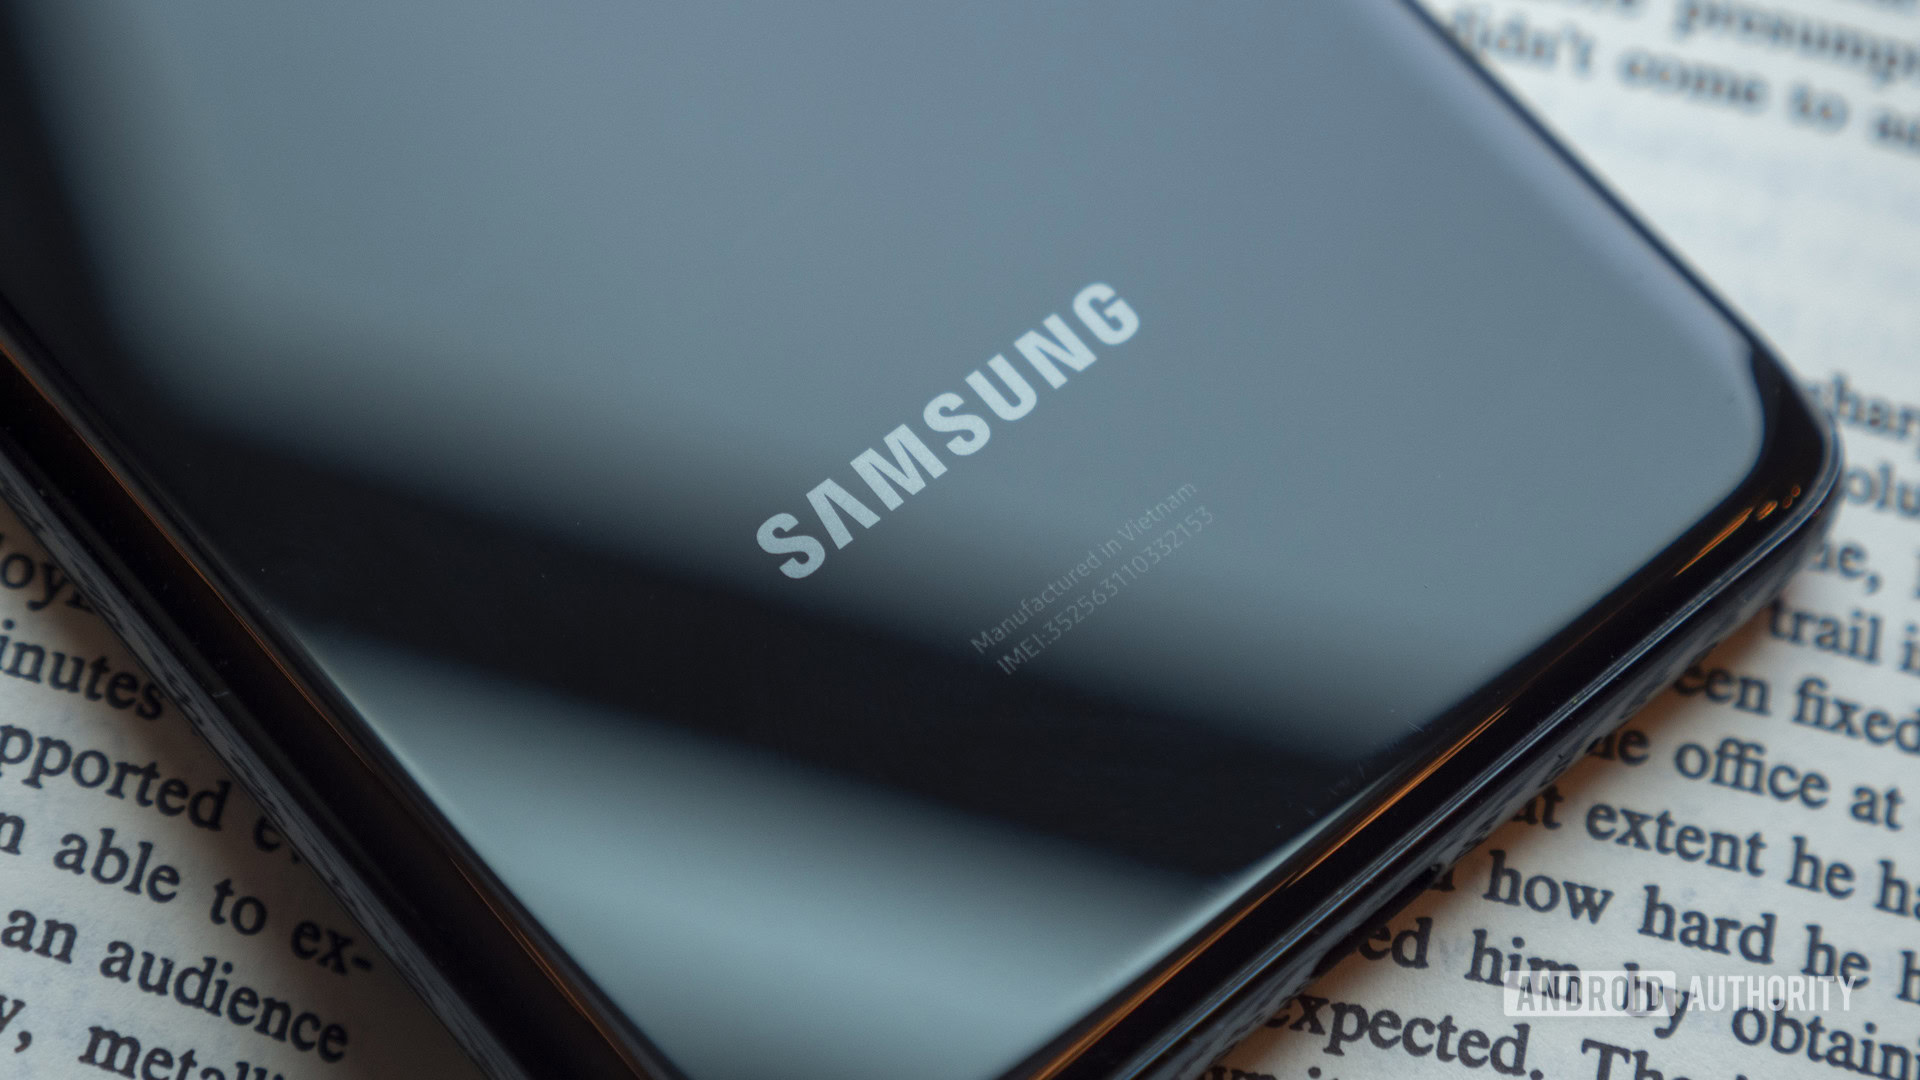 Uitdrukkelijk kaas Pelgrim Every Samsung Galaxy device eligible for four years of Android updates